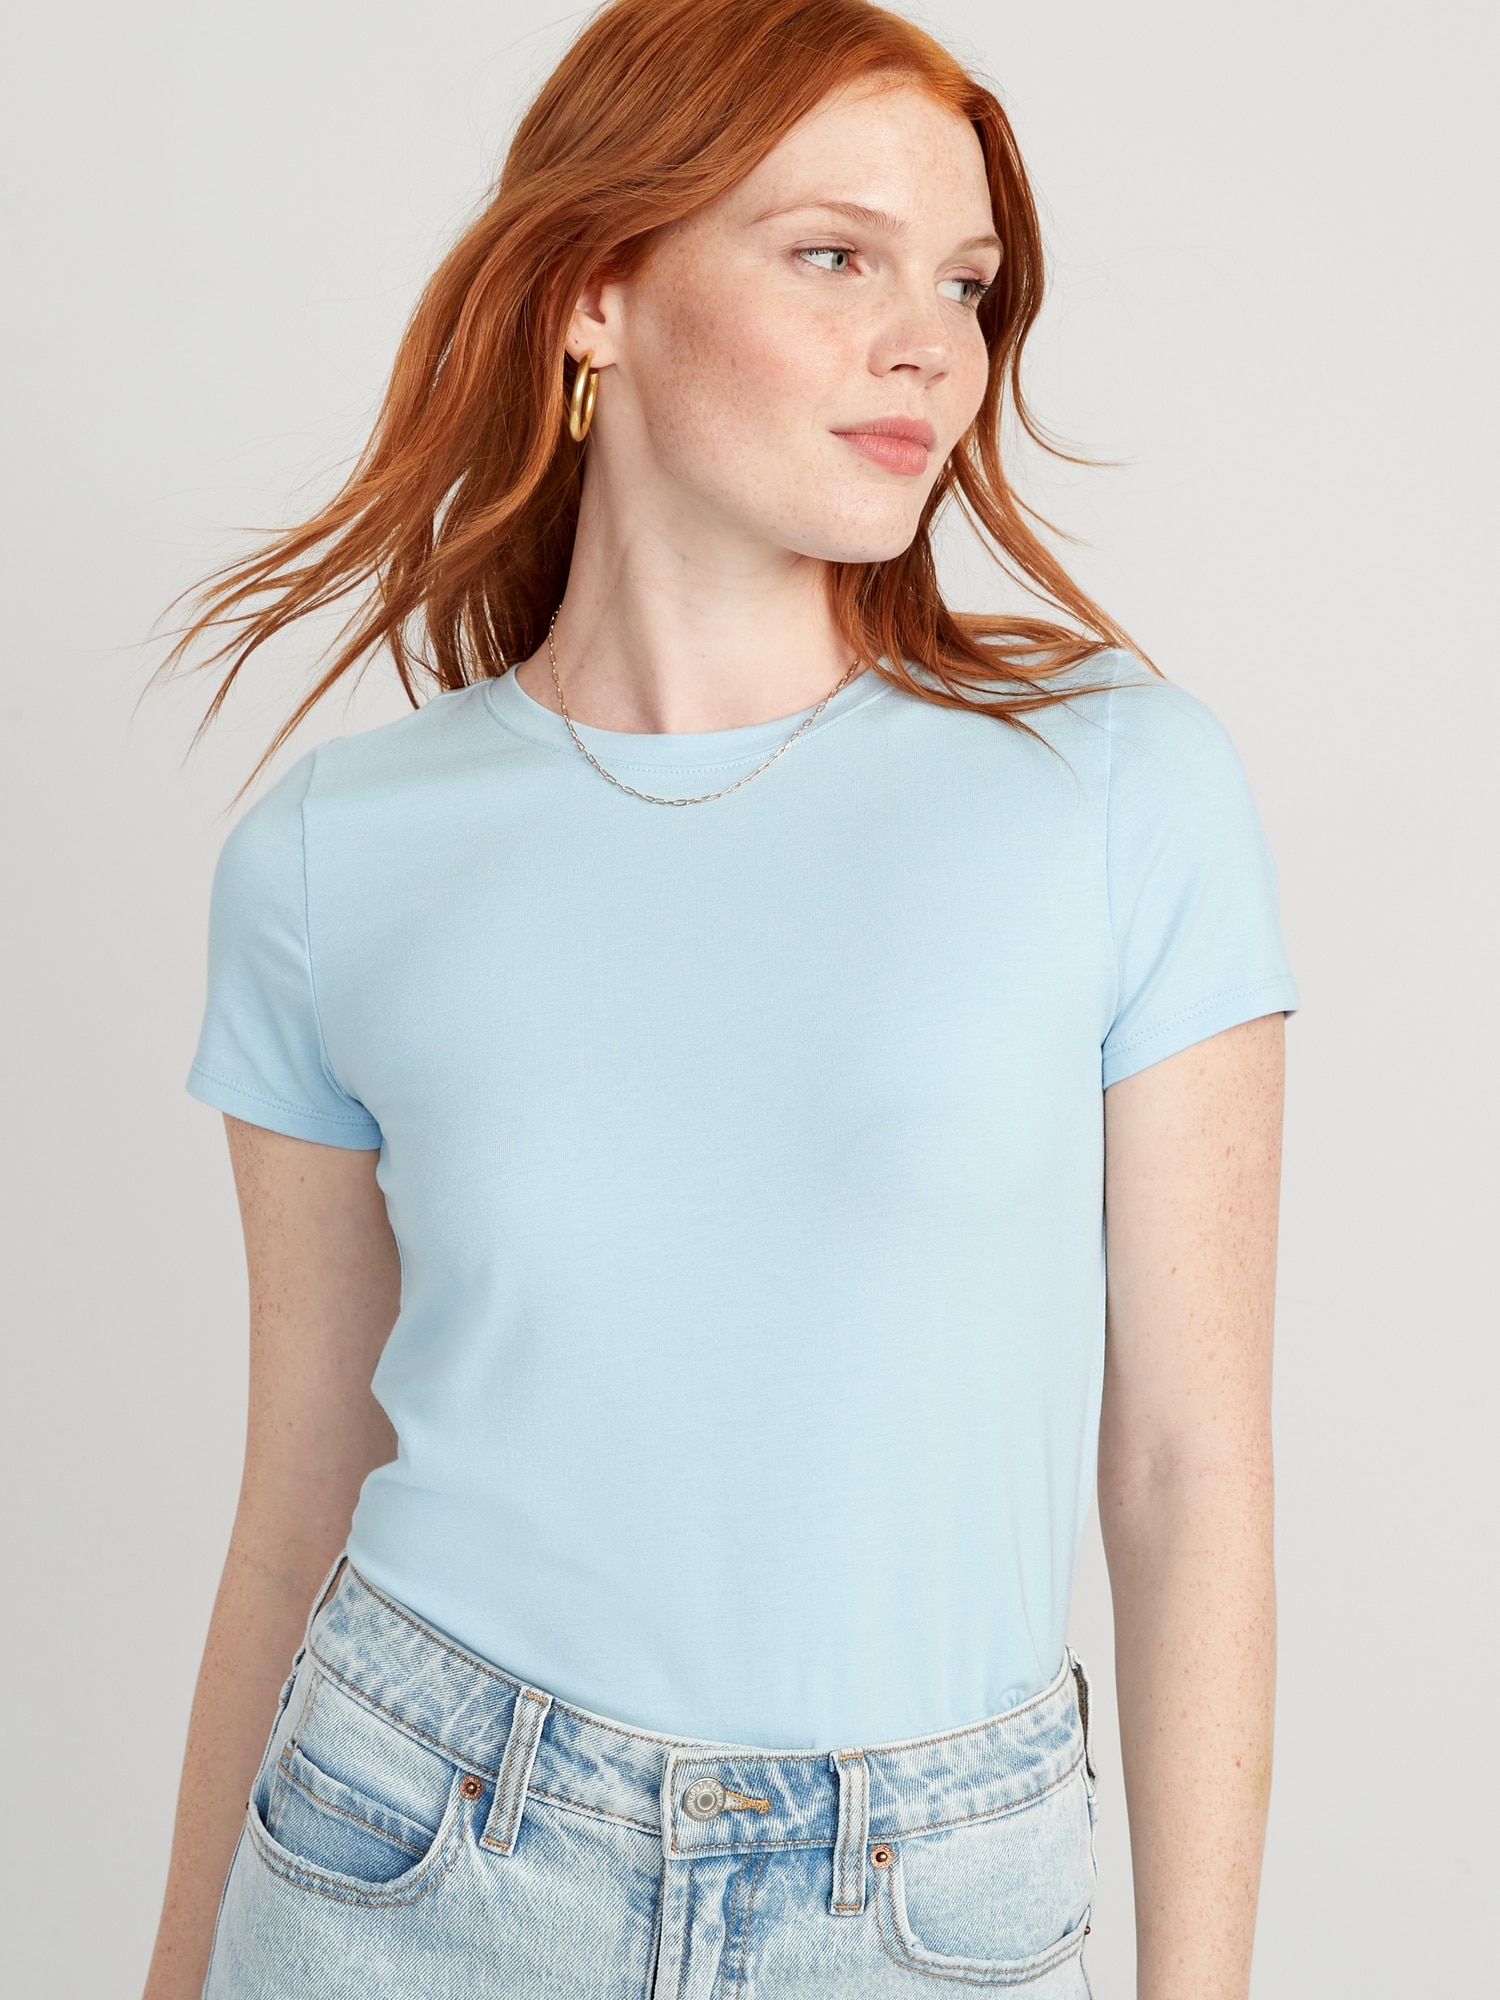 Repressalier salami halv otte Cropped Slim-Fit T-Shirt for Women | Old Navy